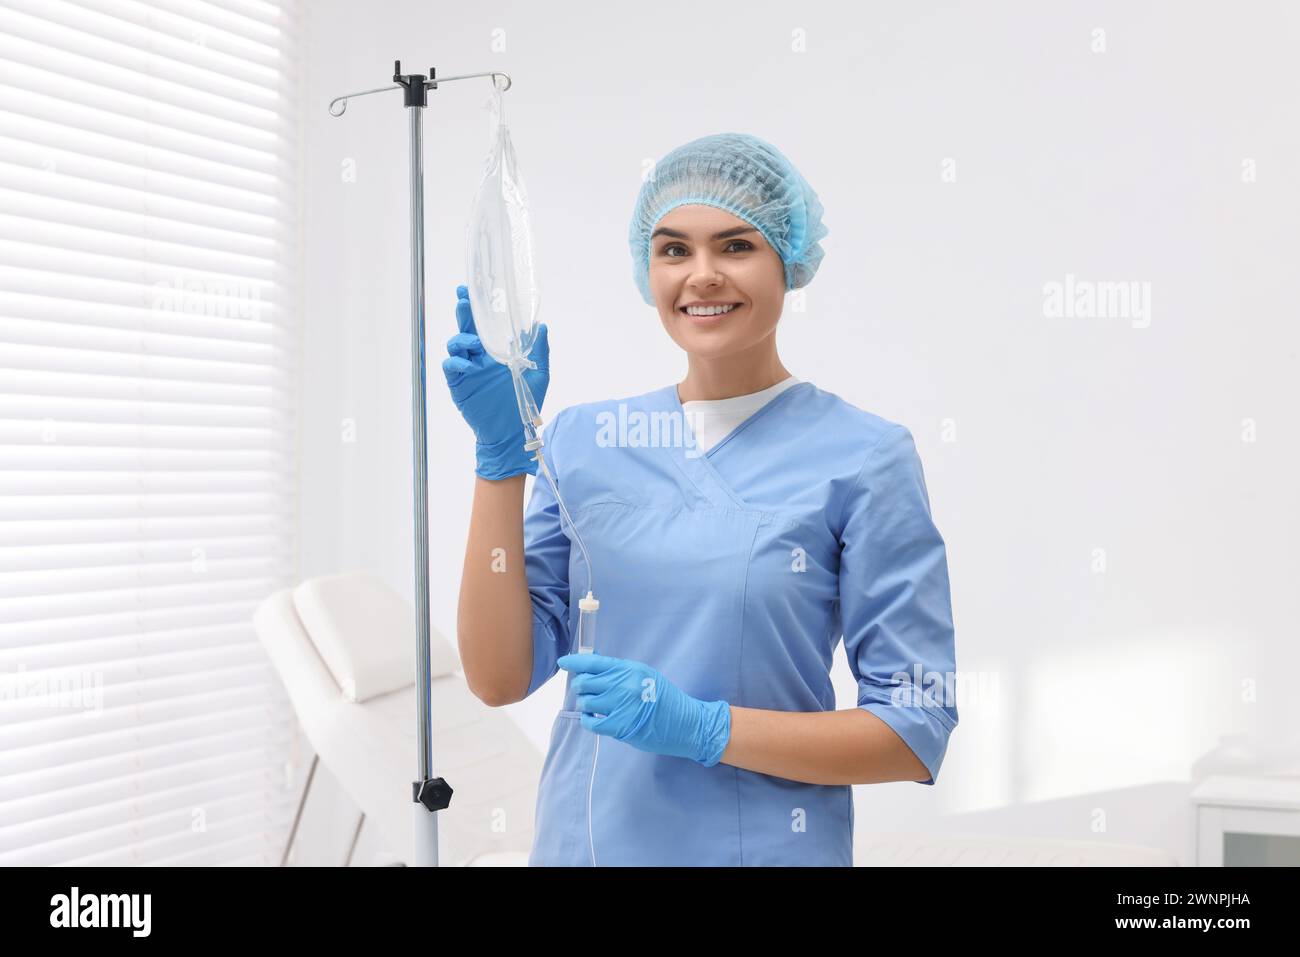 Nurse setting up IV drip in hospital Stock Photo